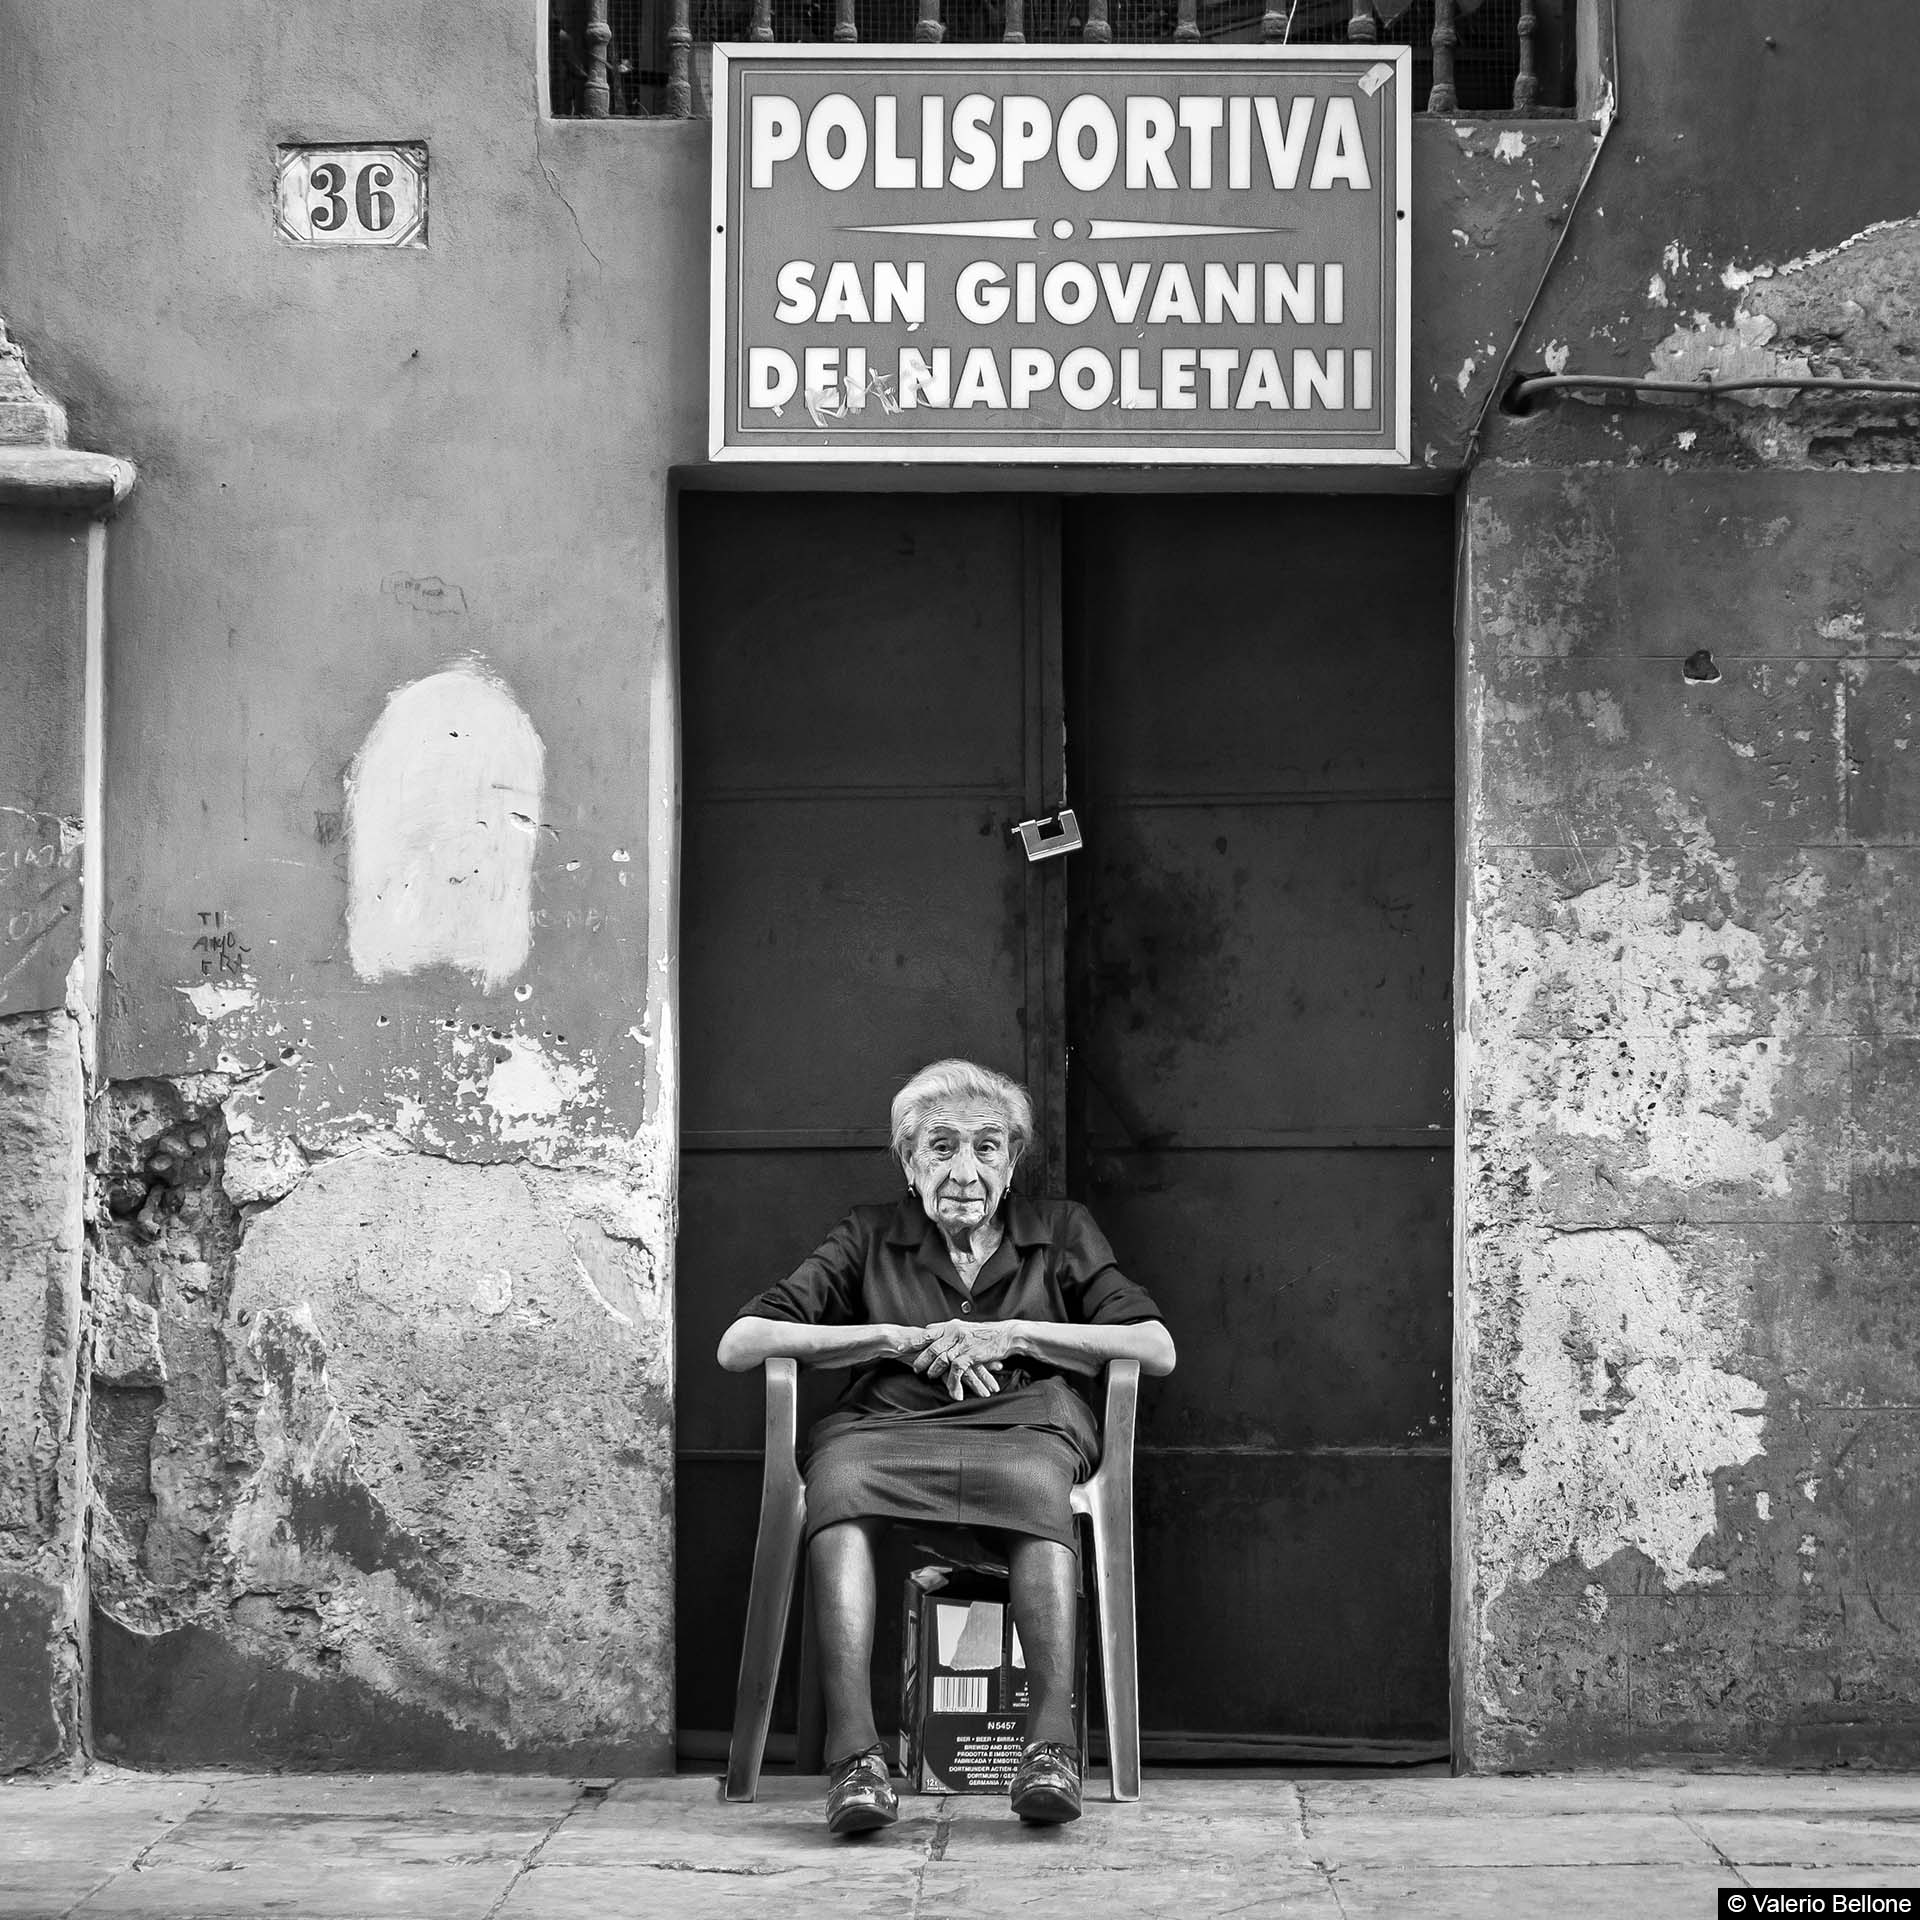 Polisportiva - © Valerio Bellone